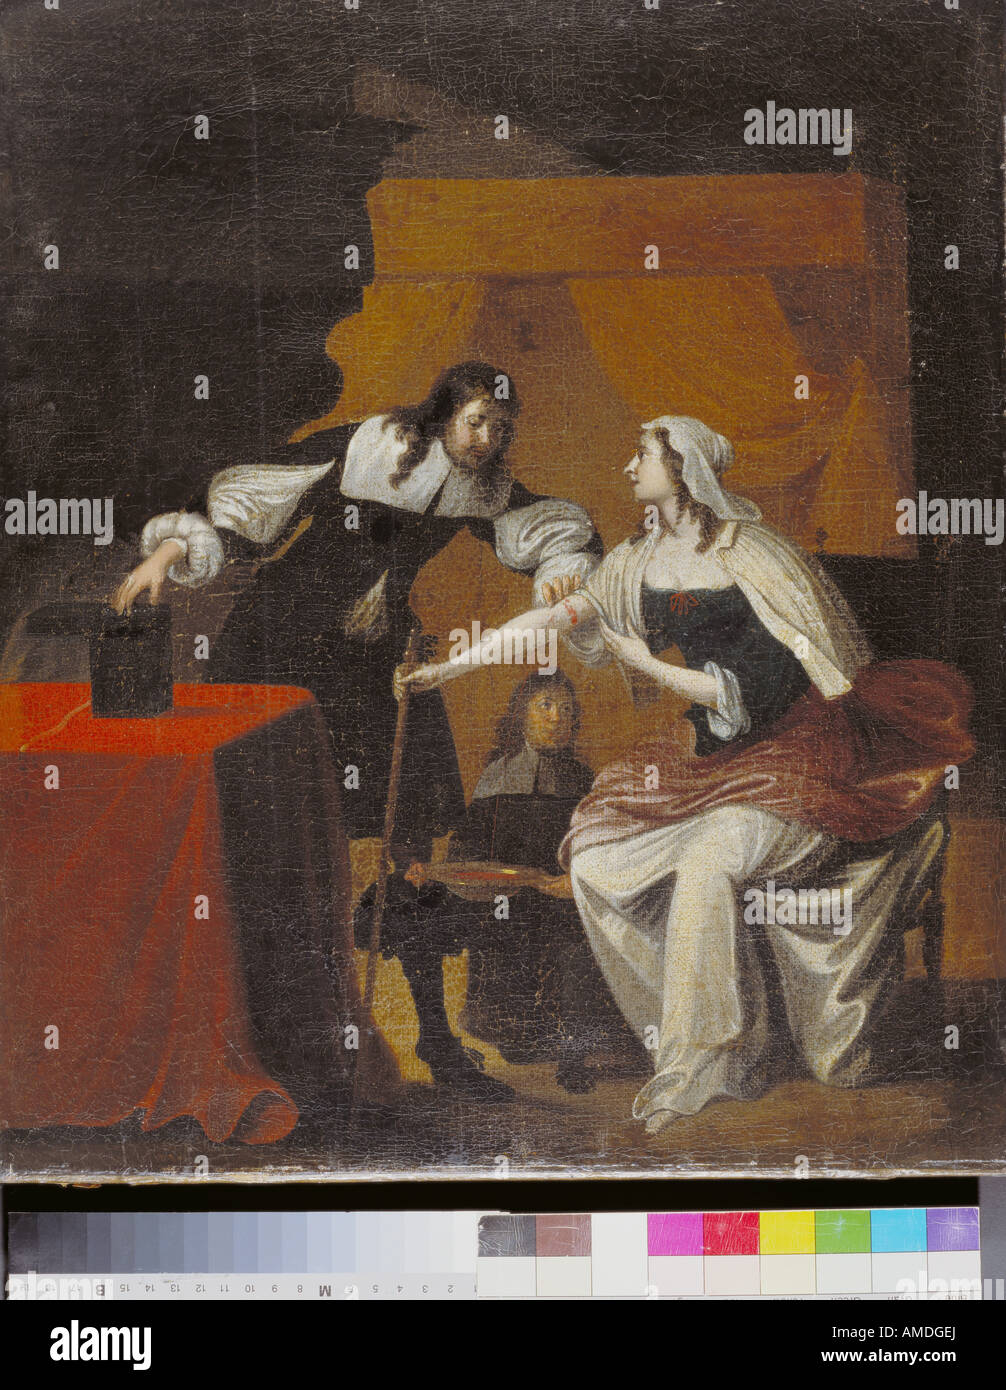 "Belle Arti, Janssen, Hieronymus, (1624 - 1693), pittura, 'il salasso', district 's Medical Association, Wuertt settentrionale Foto Stock